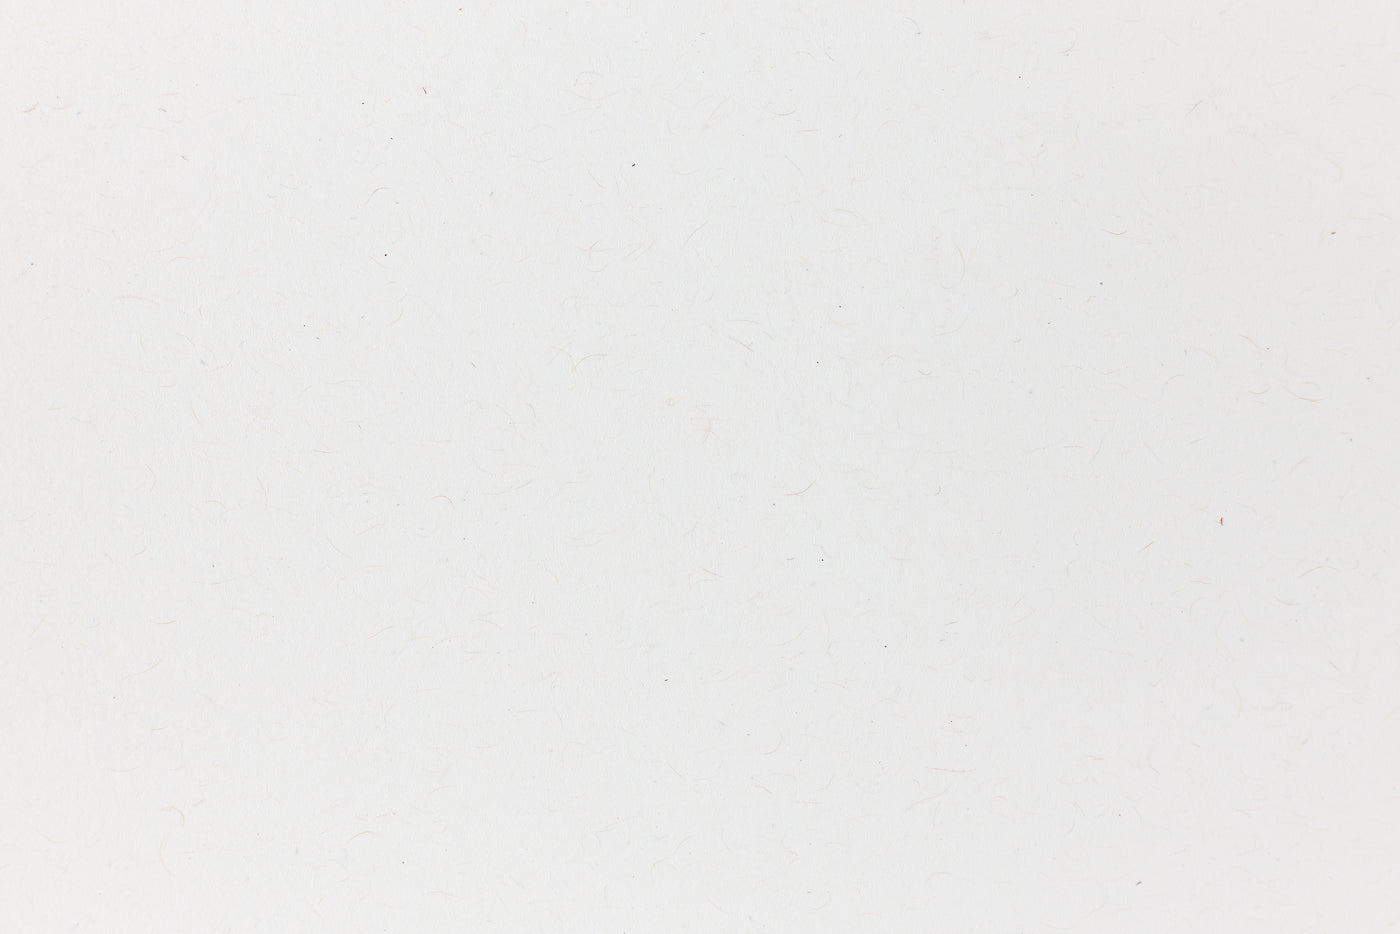 Standard White Kraft Envelope (Kraft-Tone)